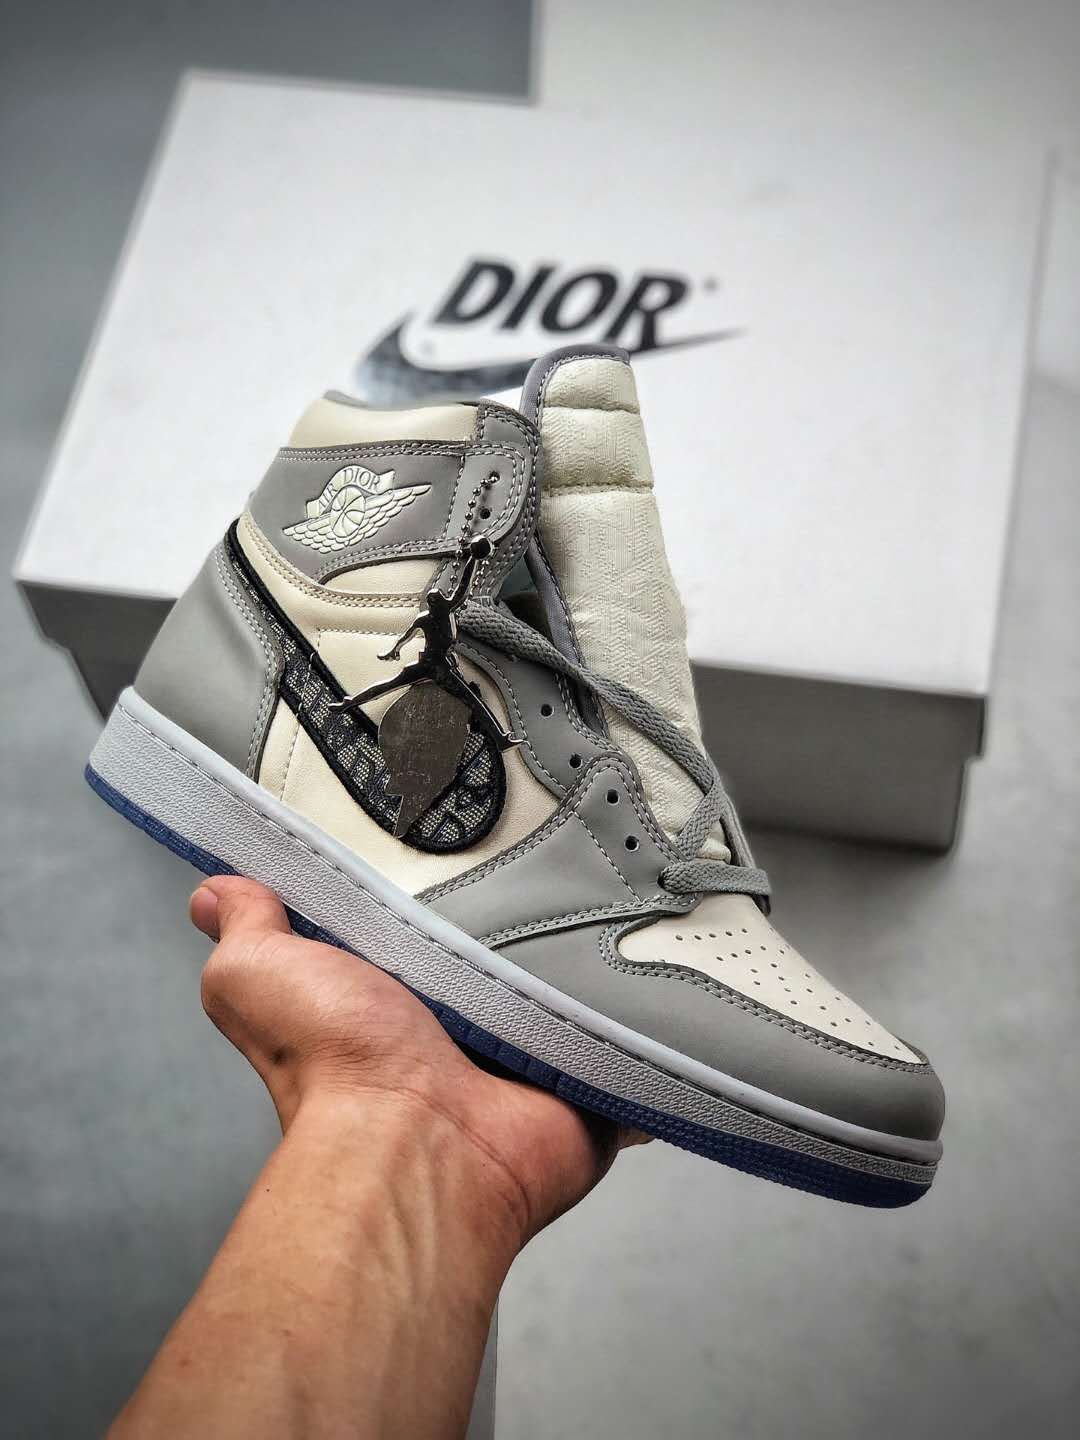 Nike Dior x Air Jordan 1 High OG Grey CN8607-002 | Limited Edition